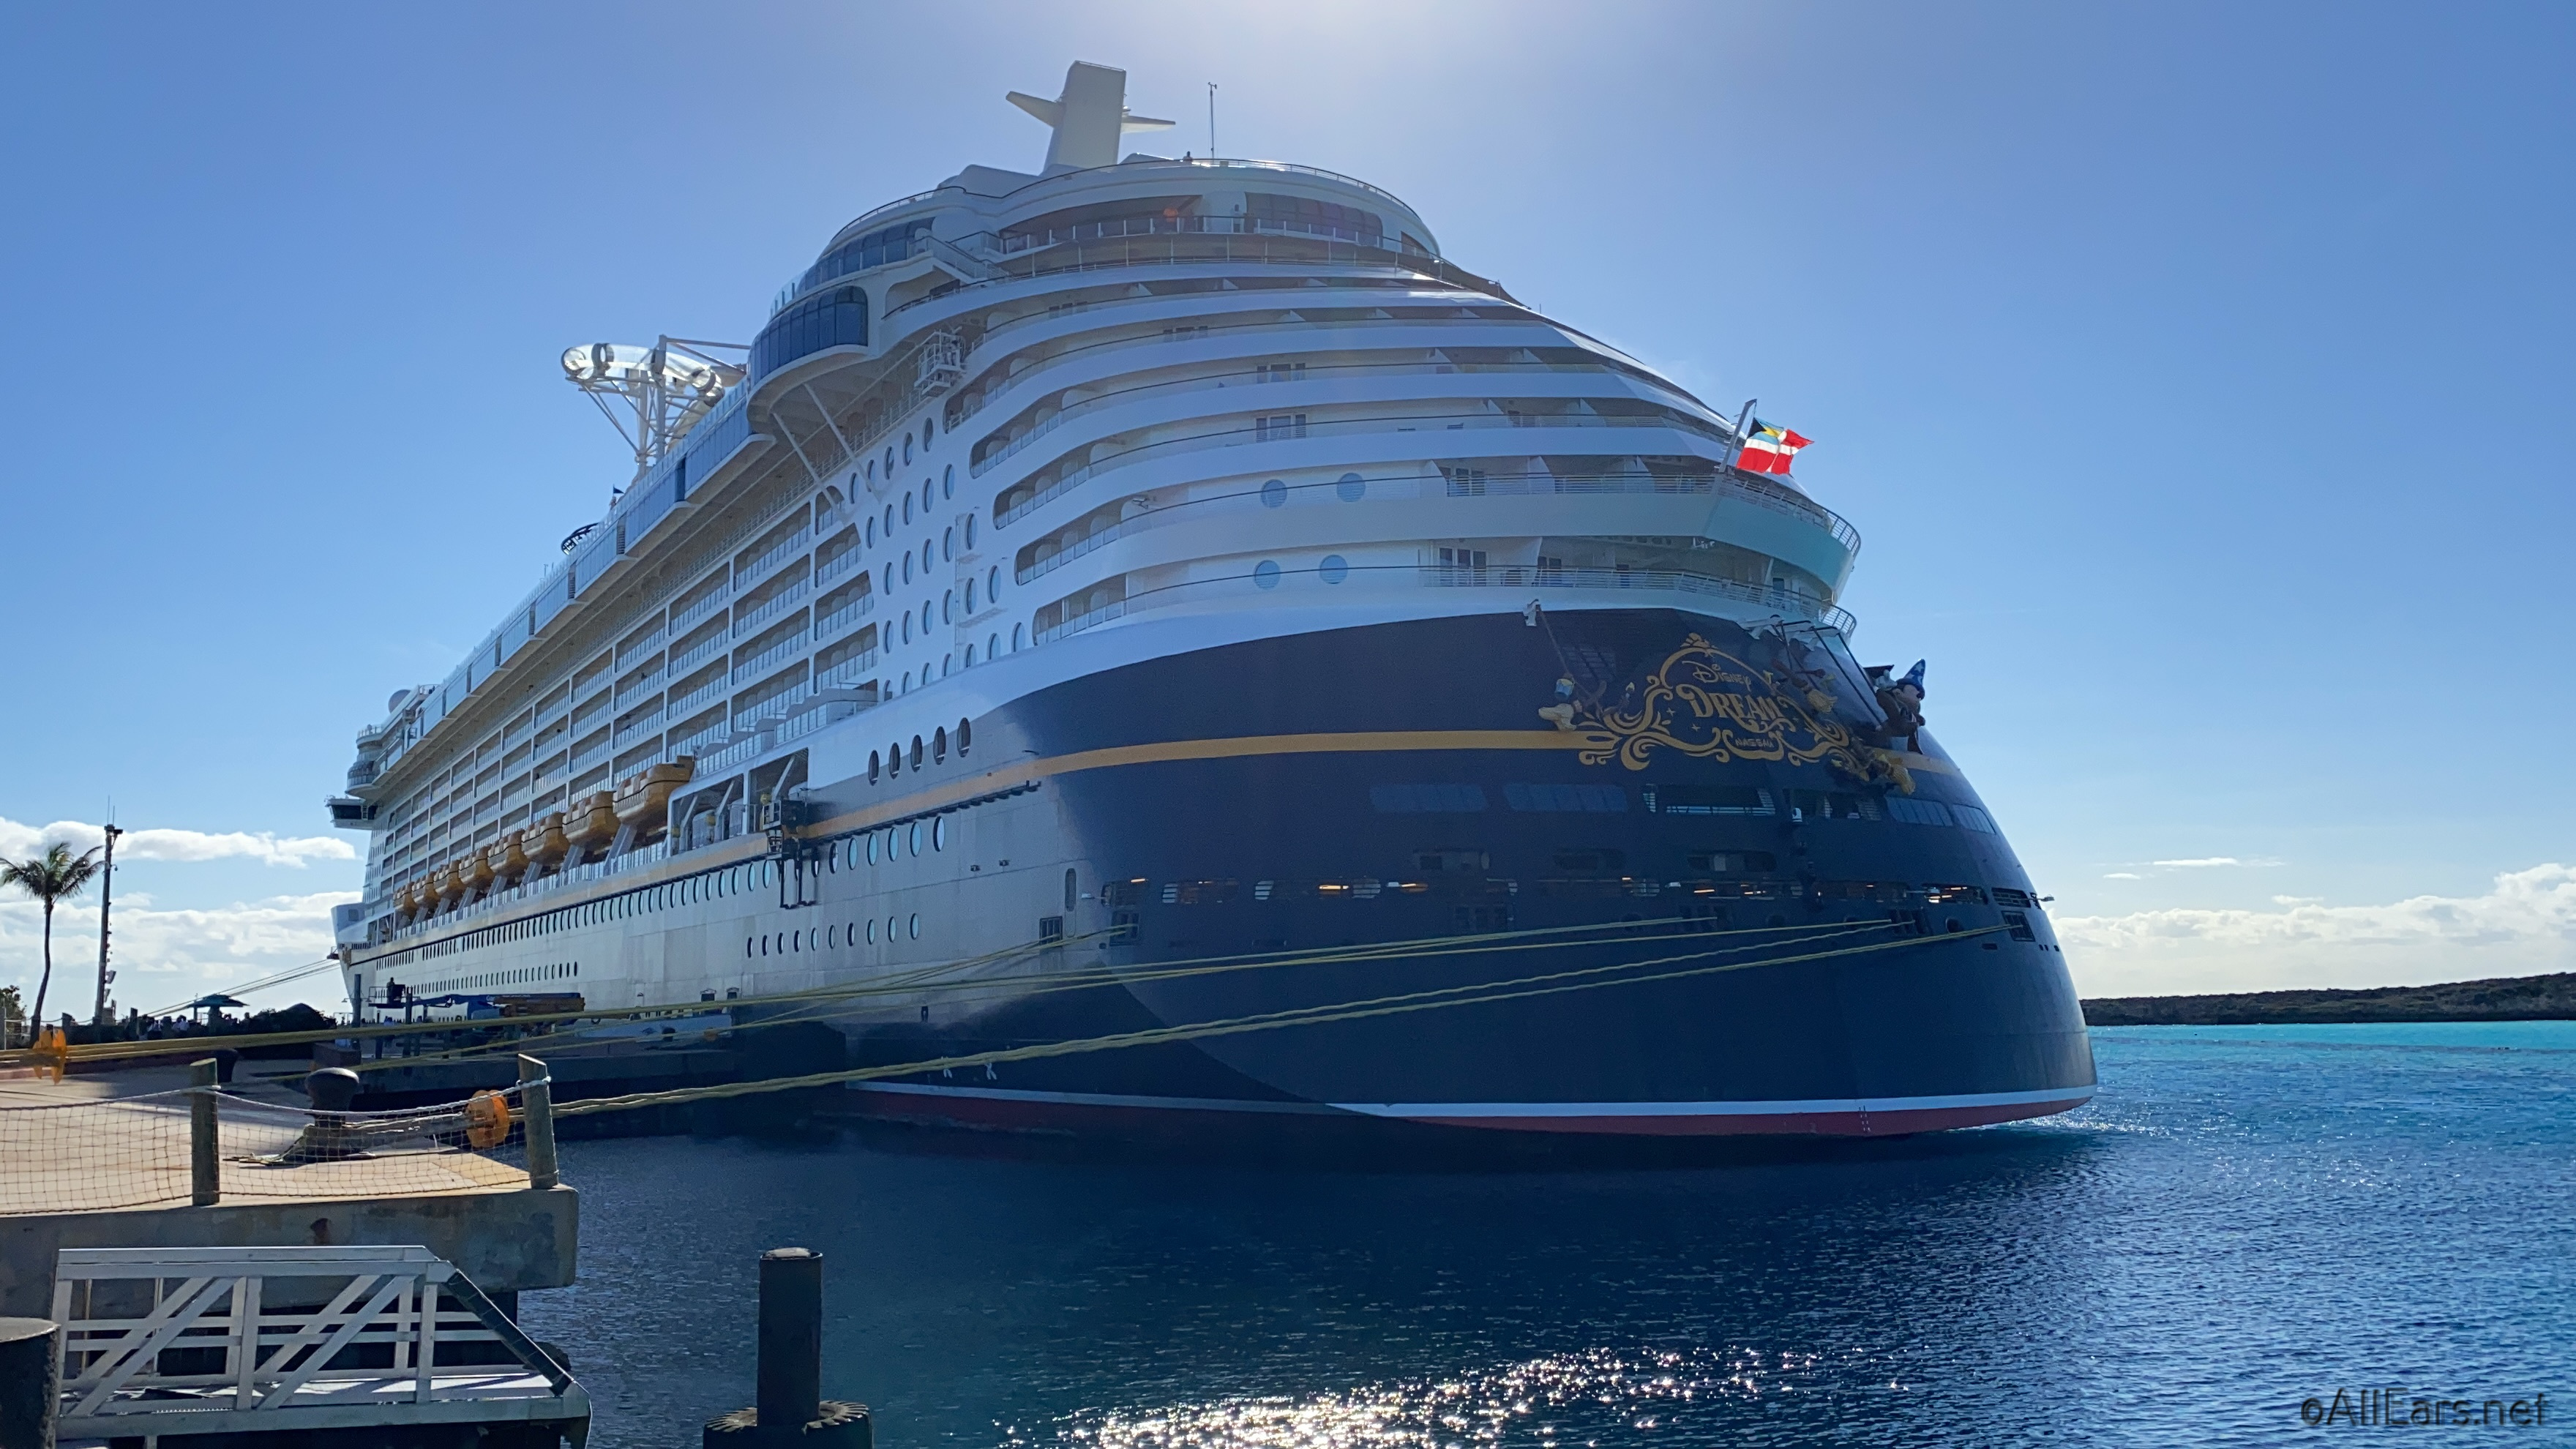 News Disney Cruise Line Cancels All Sailings Through February 2021 Allears Net